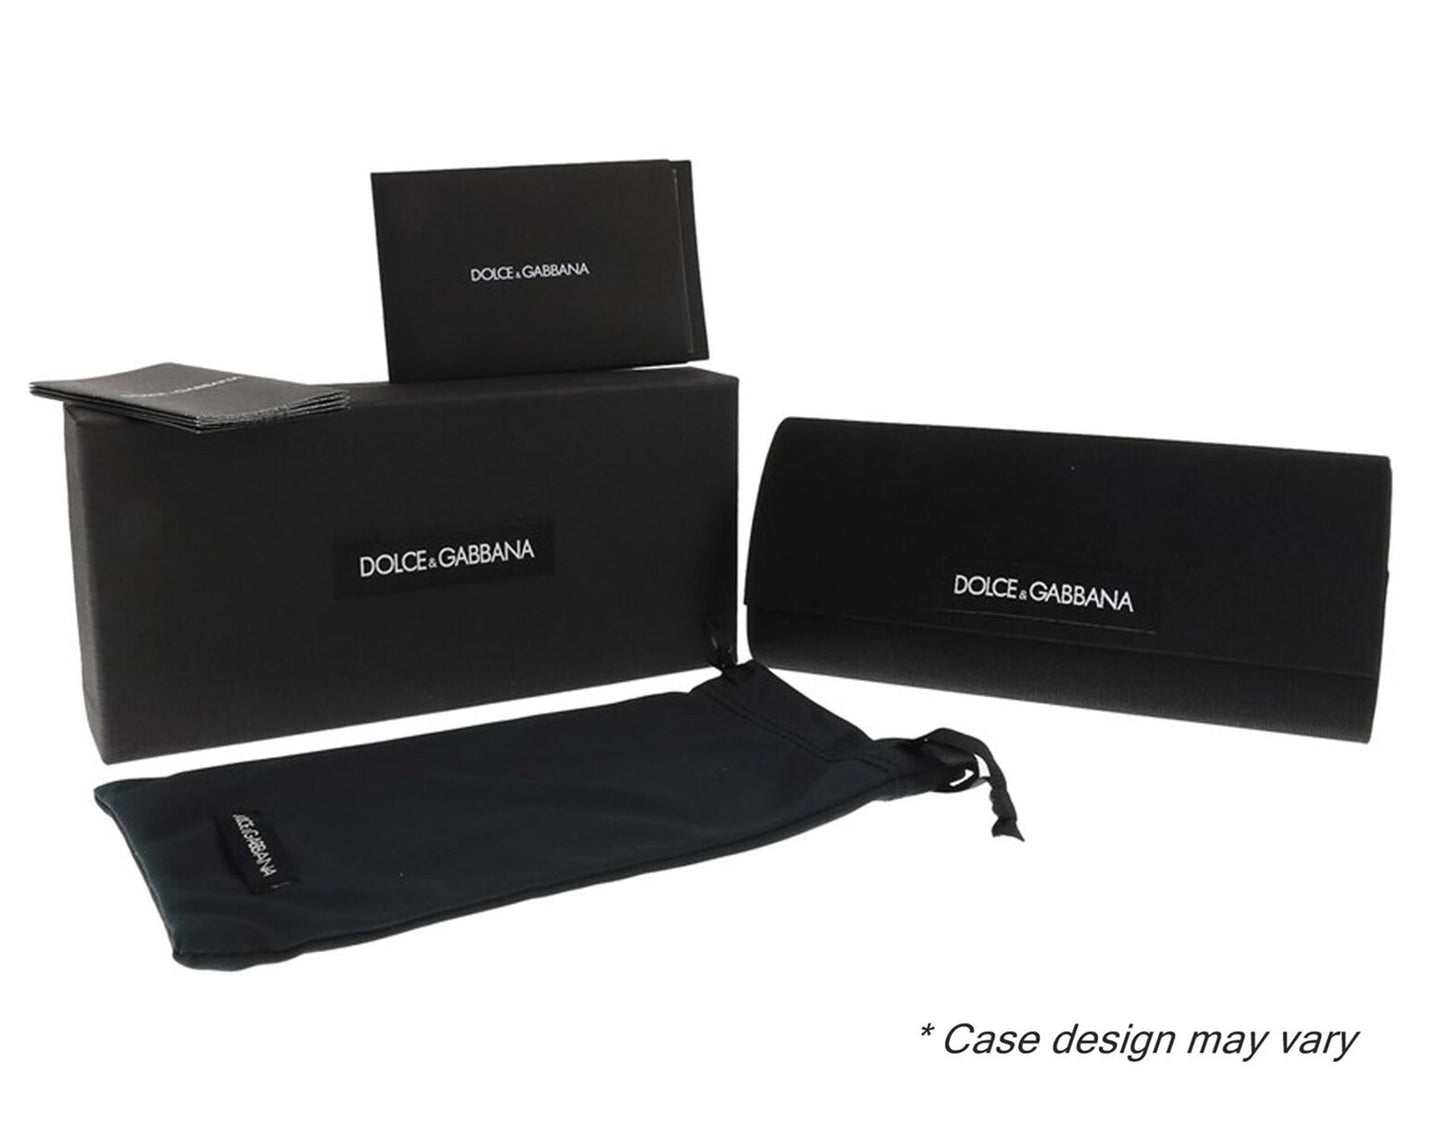 Dolce & Gabbana 0DG4392F-501/8G 56mm New Sunglasses